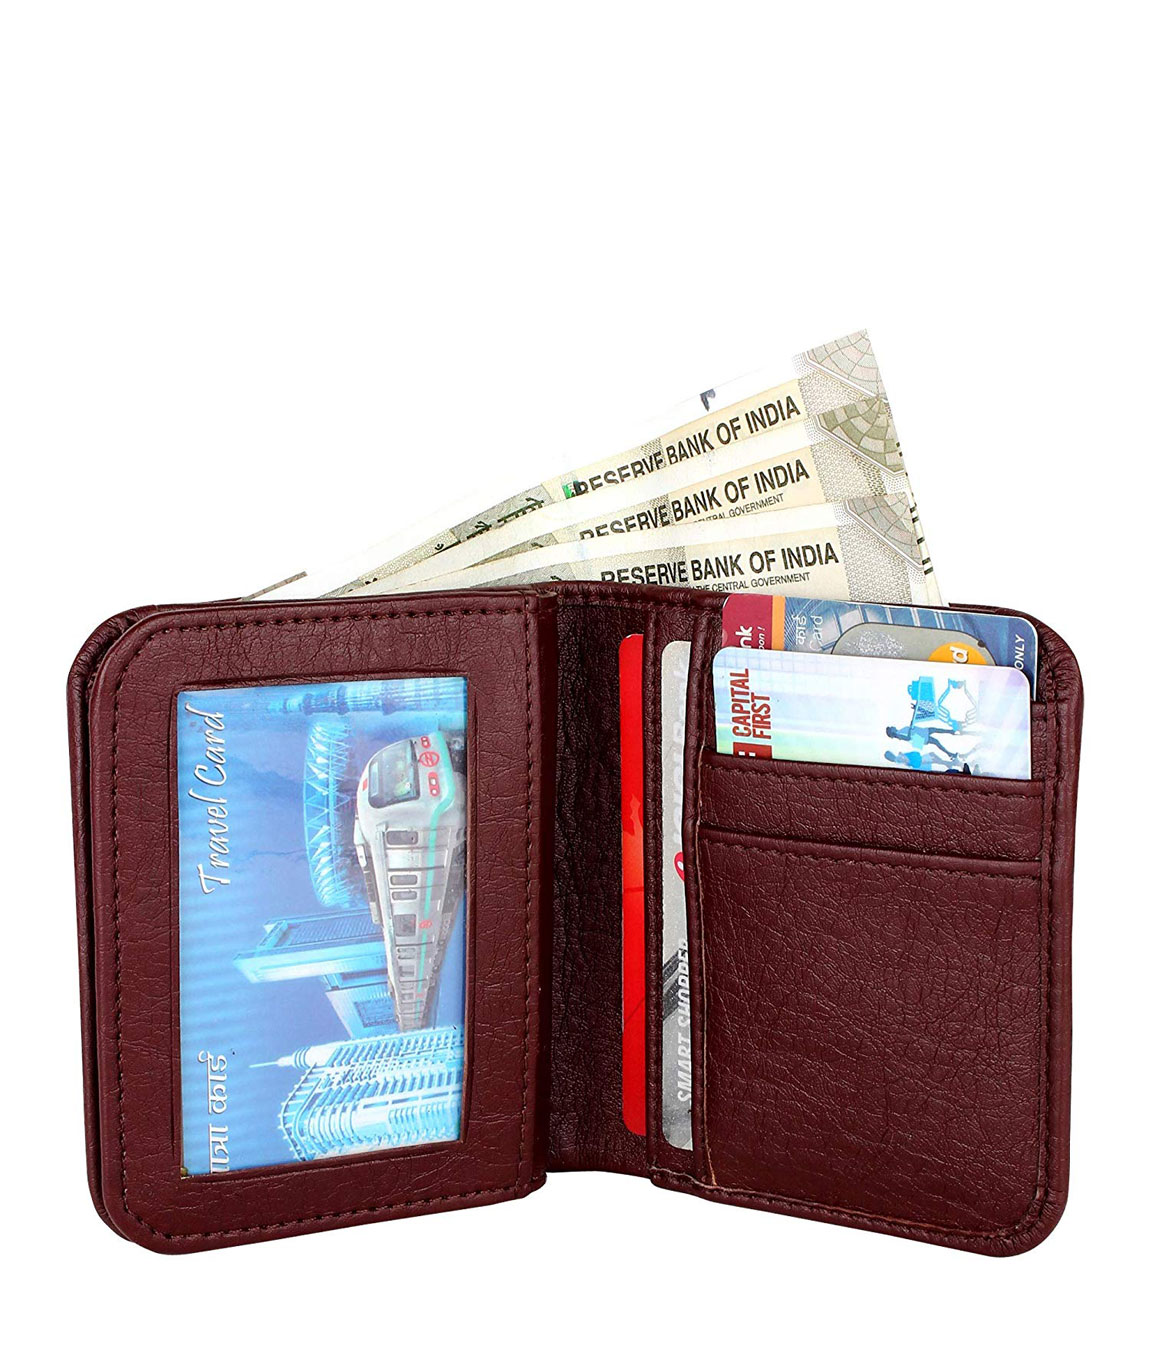 zoro mens wallet purse for men s card wallet gents purse wallet 23r c4